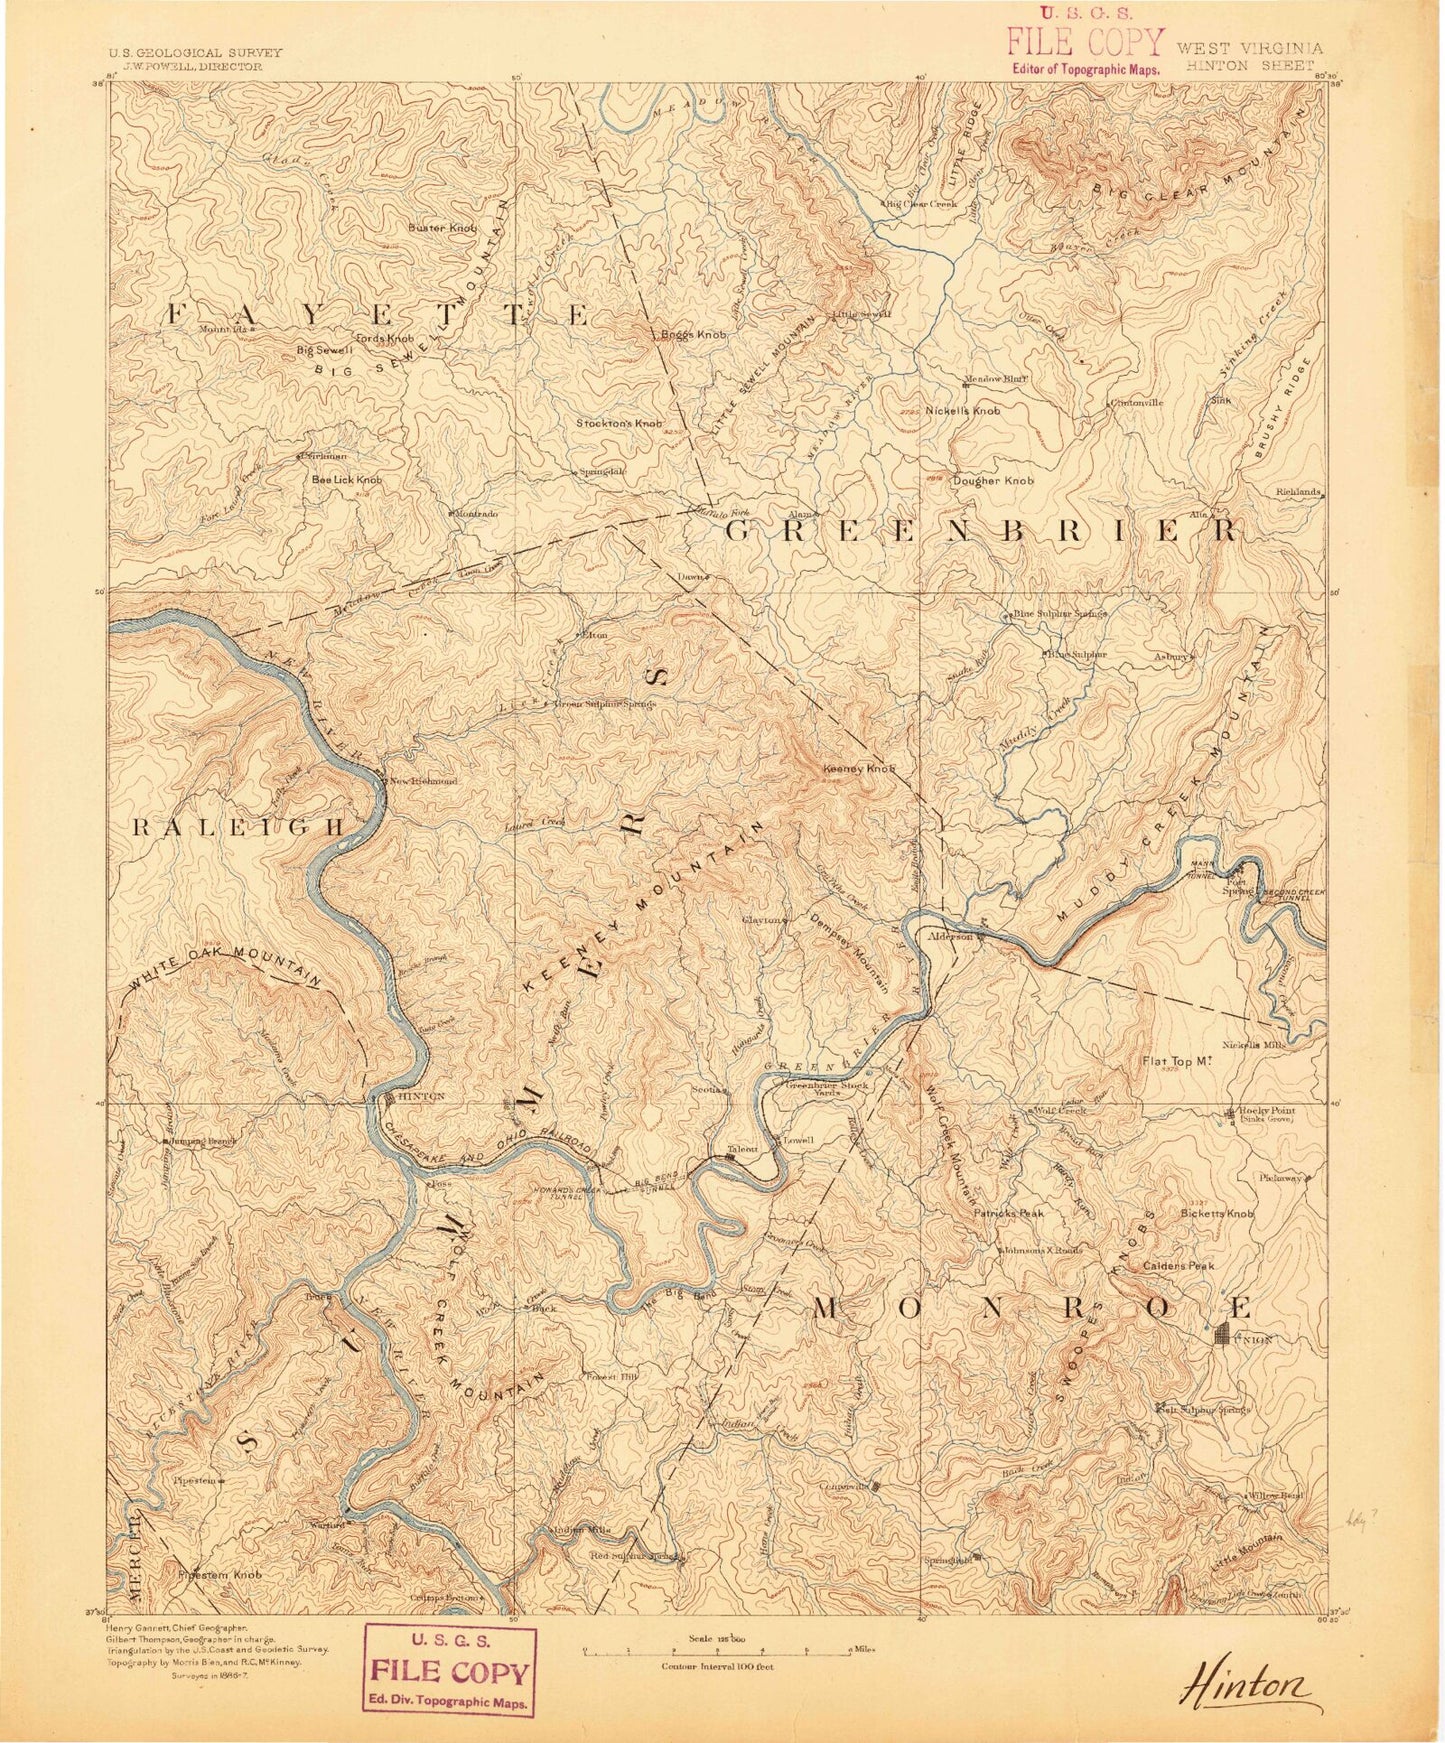 Historic 1887 Hinton West Virginia 30'x30' Topo Map Image